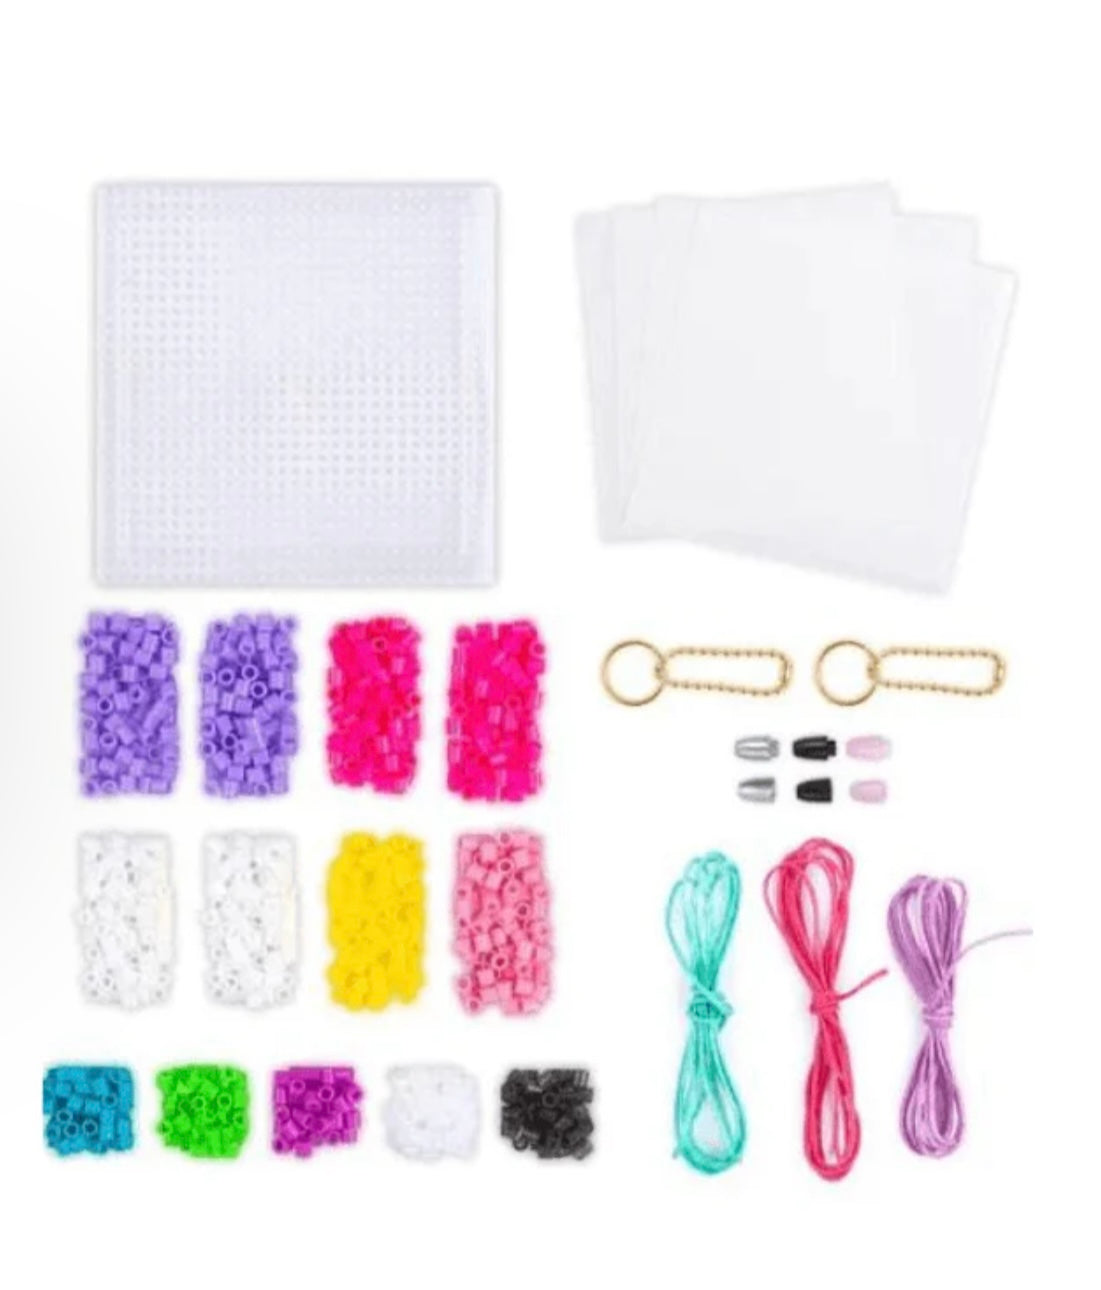 Barbie Fuse Bead Accessory Creation Set Kids Coloured Beads Home Craft Kit Barbie Movie Themed